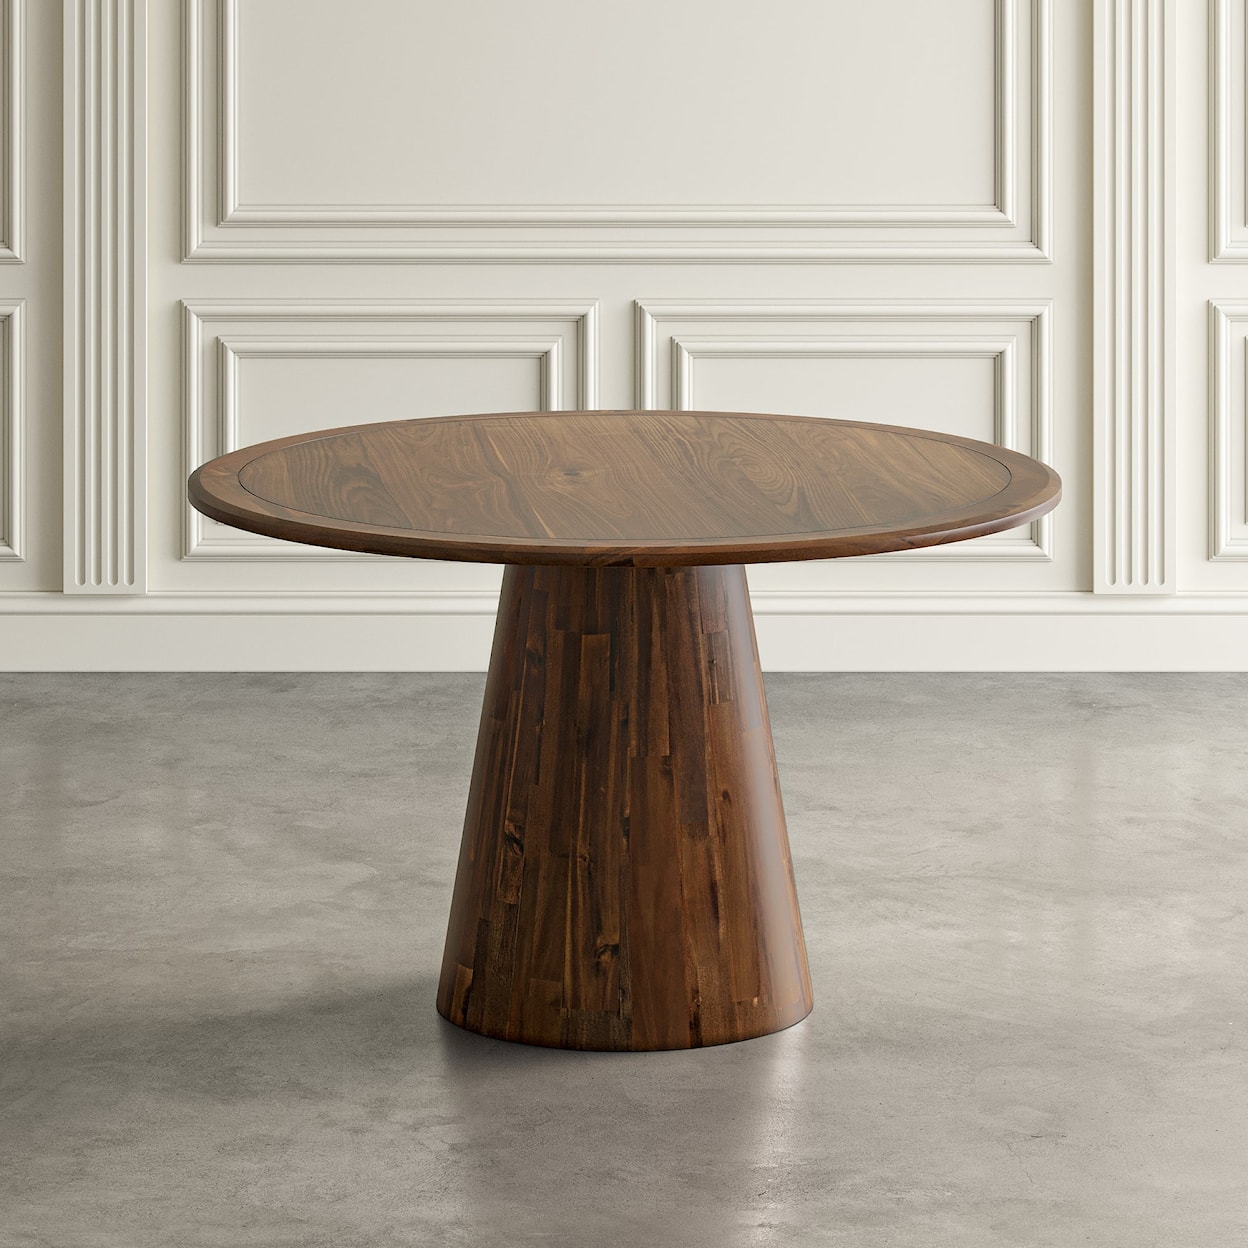 VFM Signature Nash Round Dining Pedestal Table